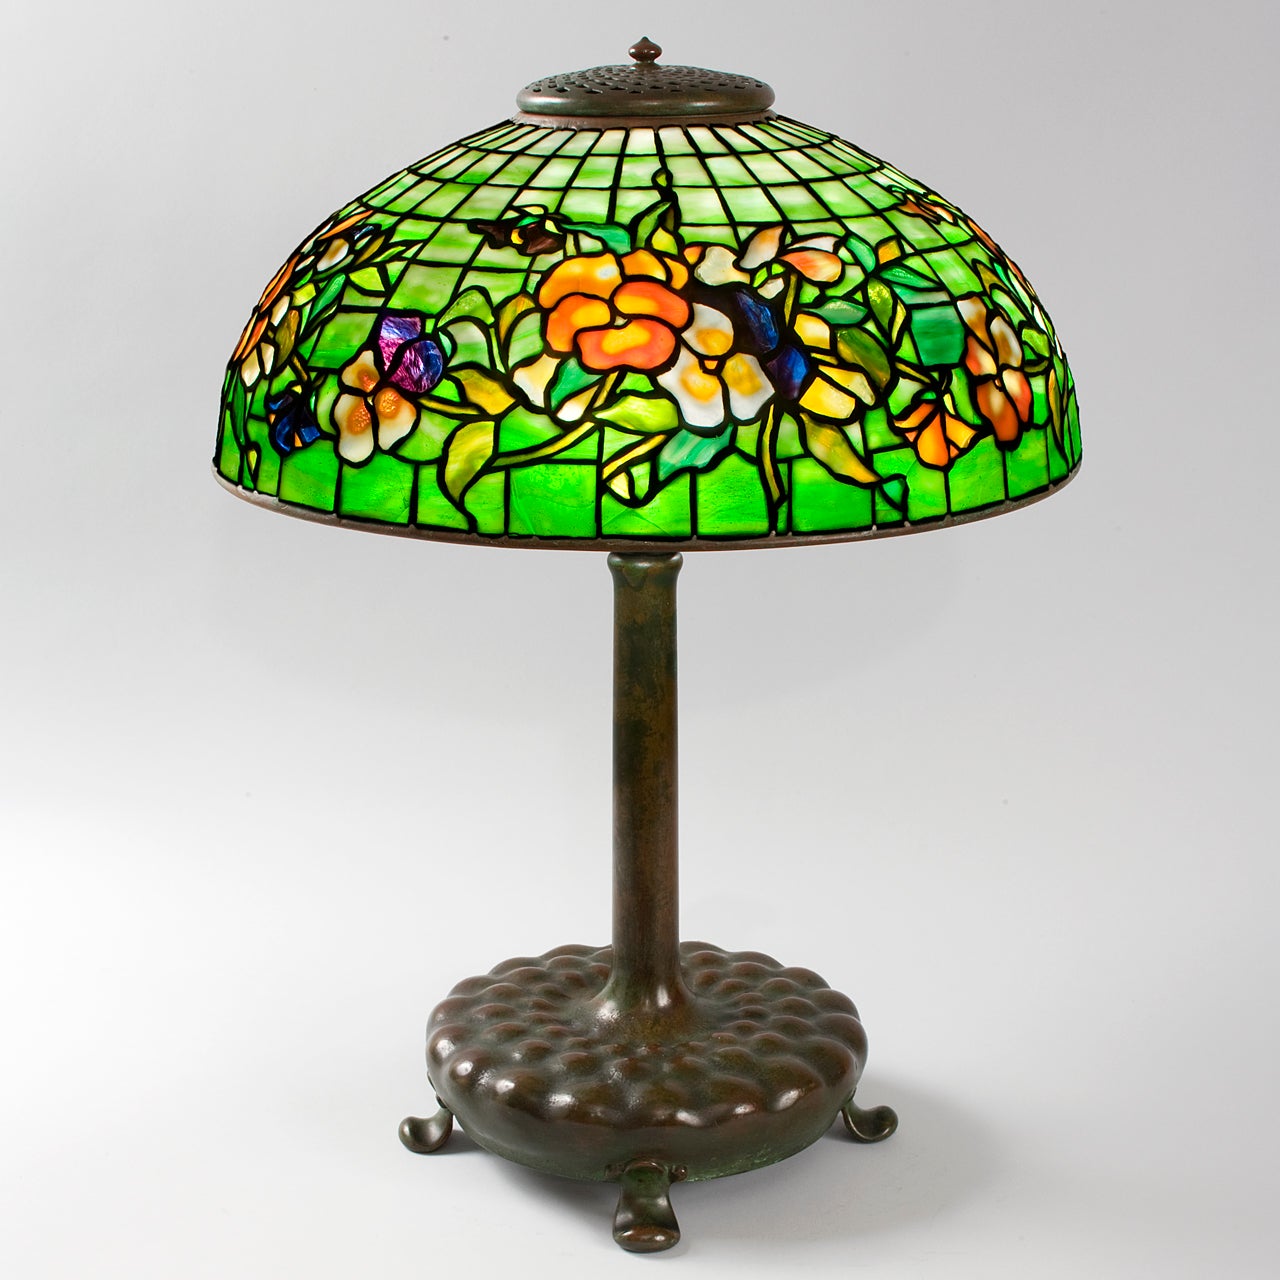 Tiffany Studios "Pansy" Lamp